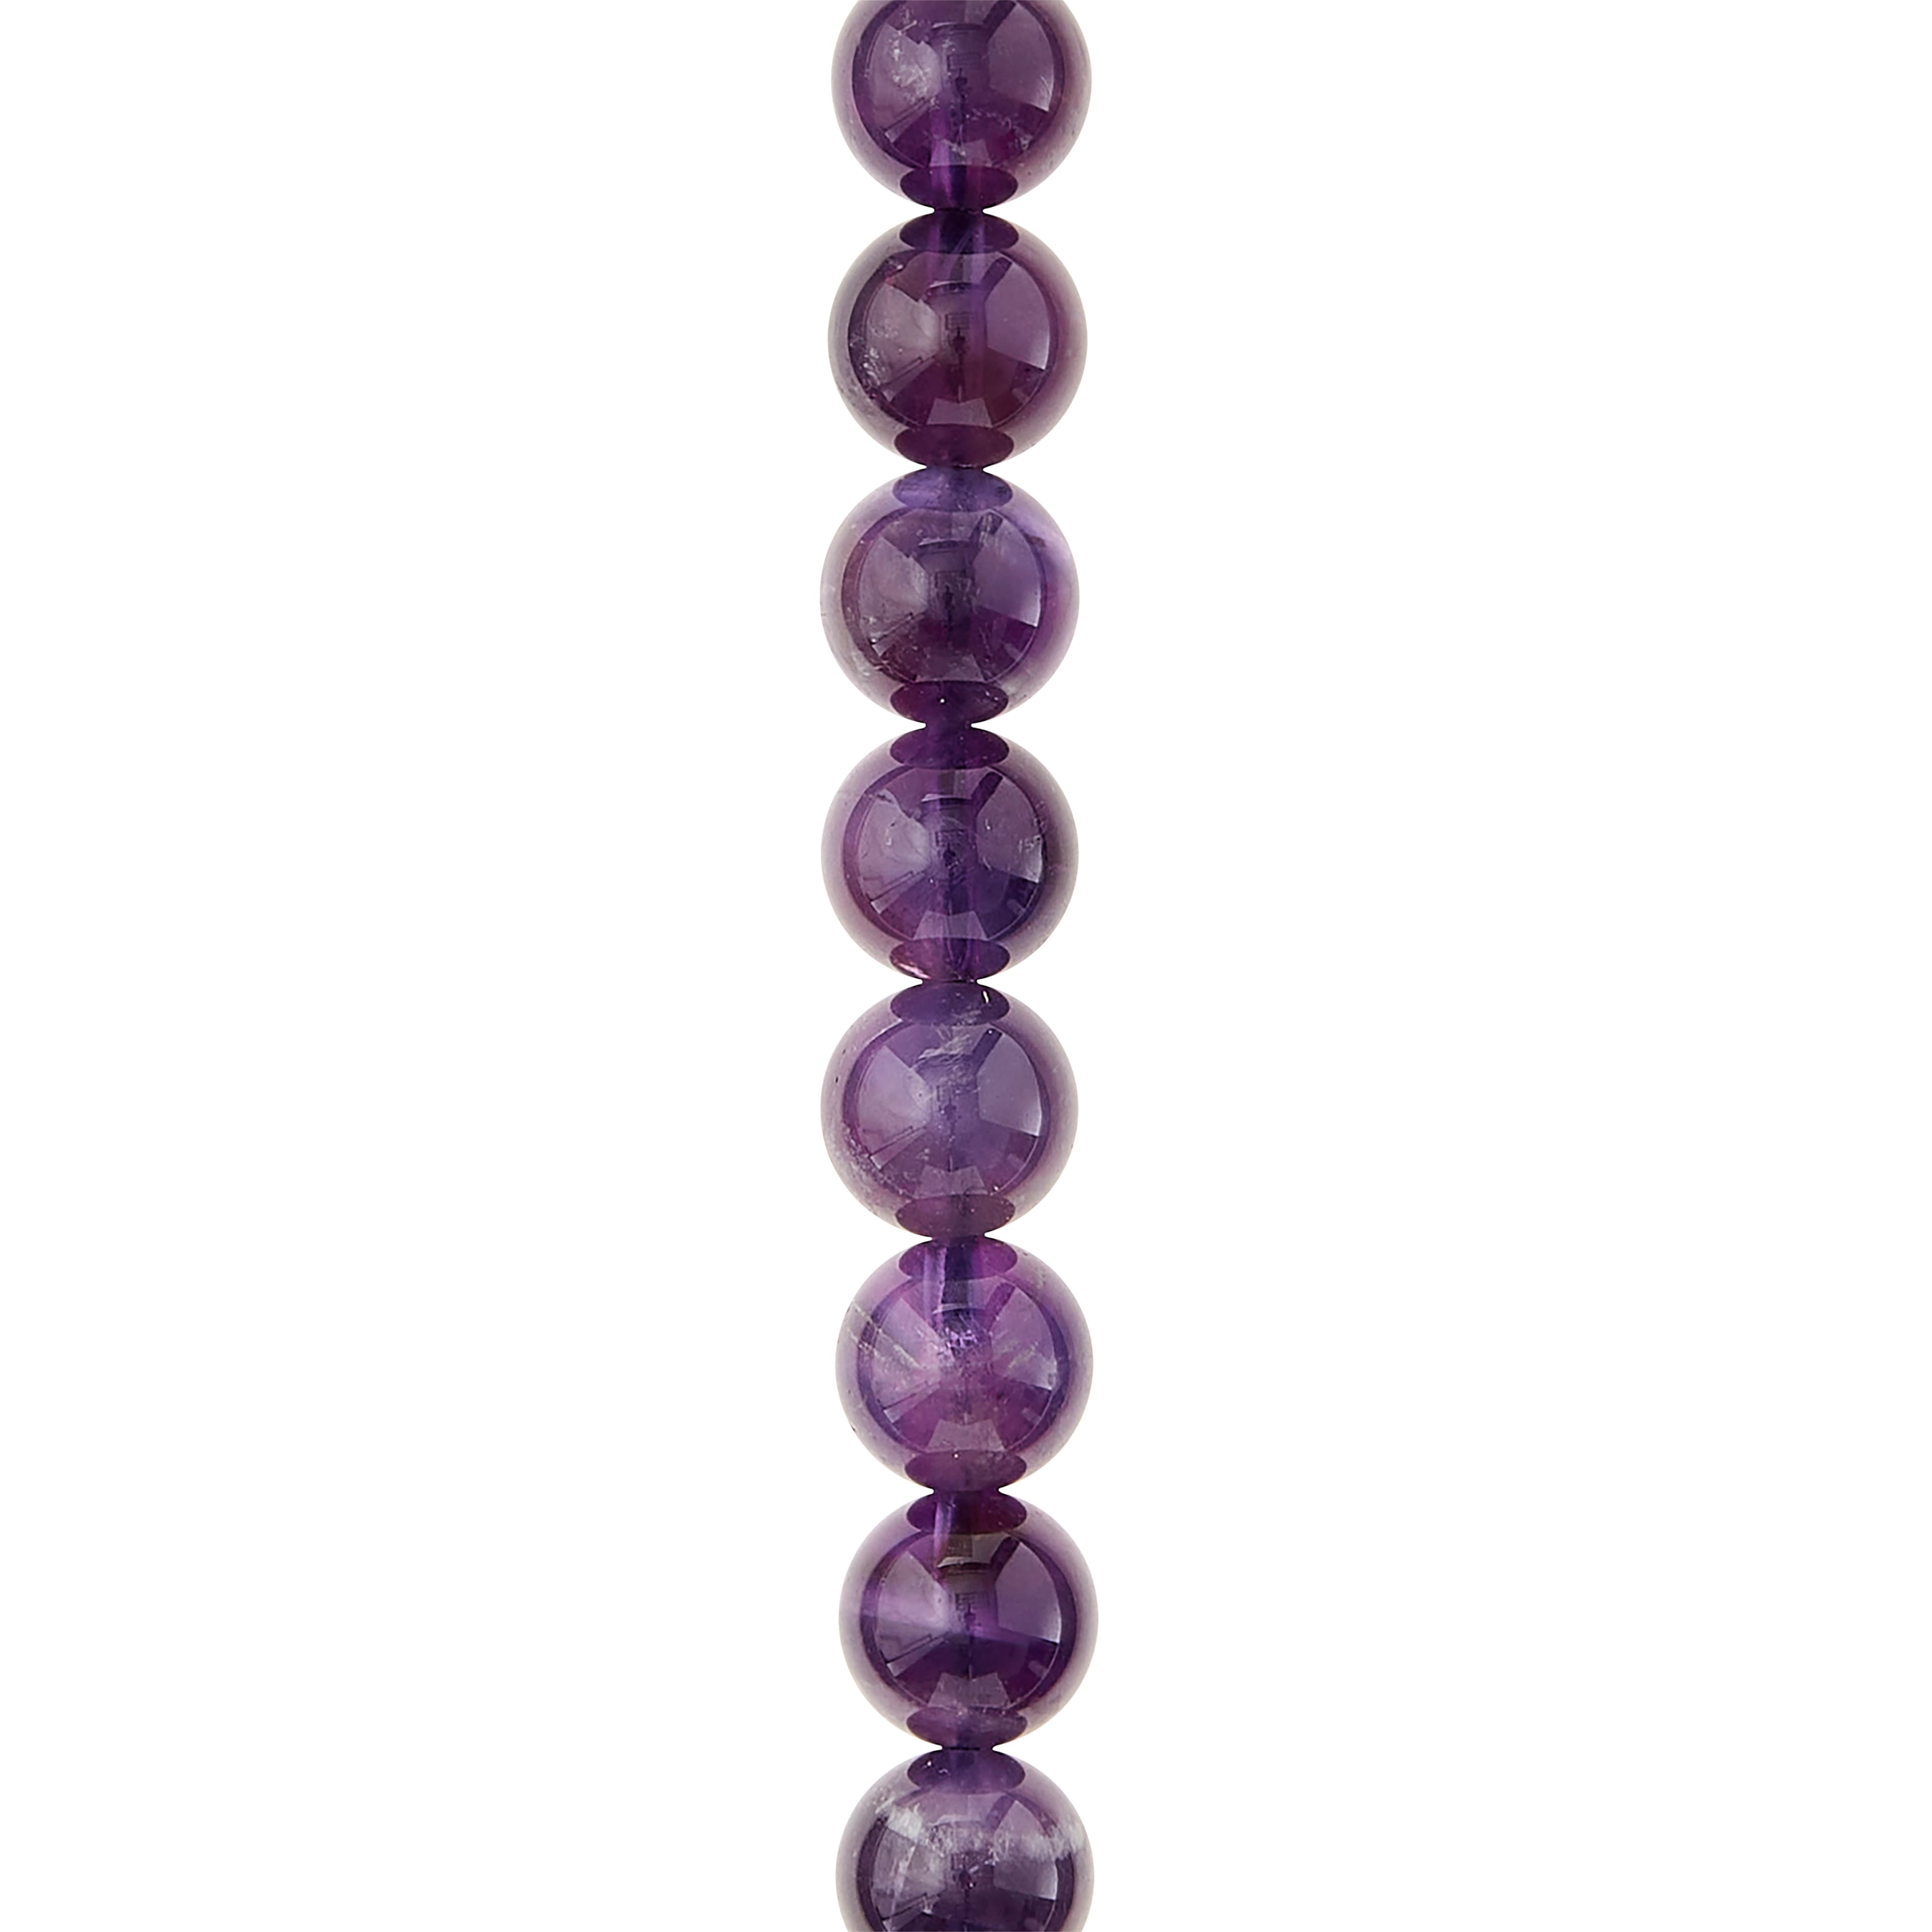 The Crafts Outlet 144-Piece Round Rhinestones, 10mm, Purple Amethyst